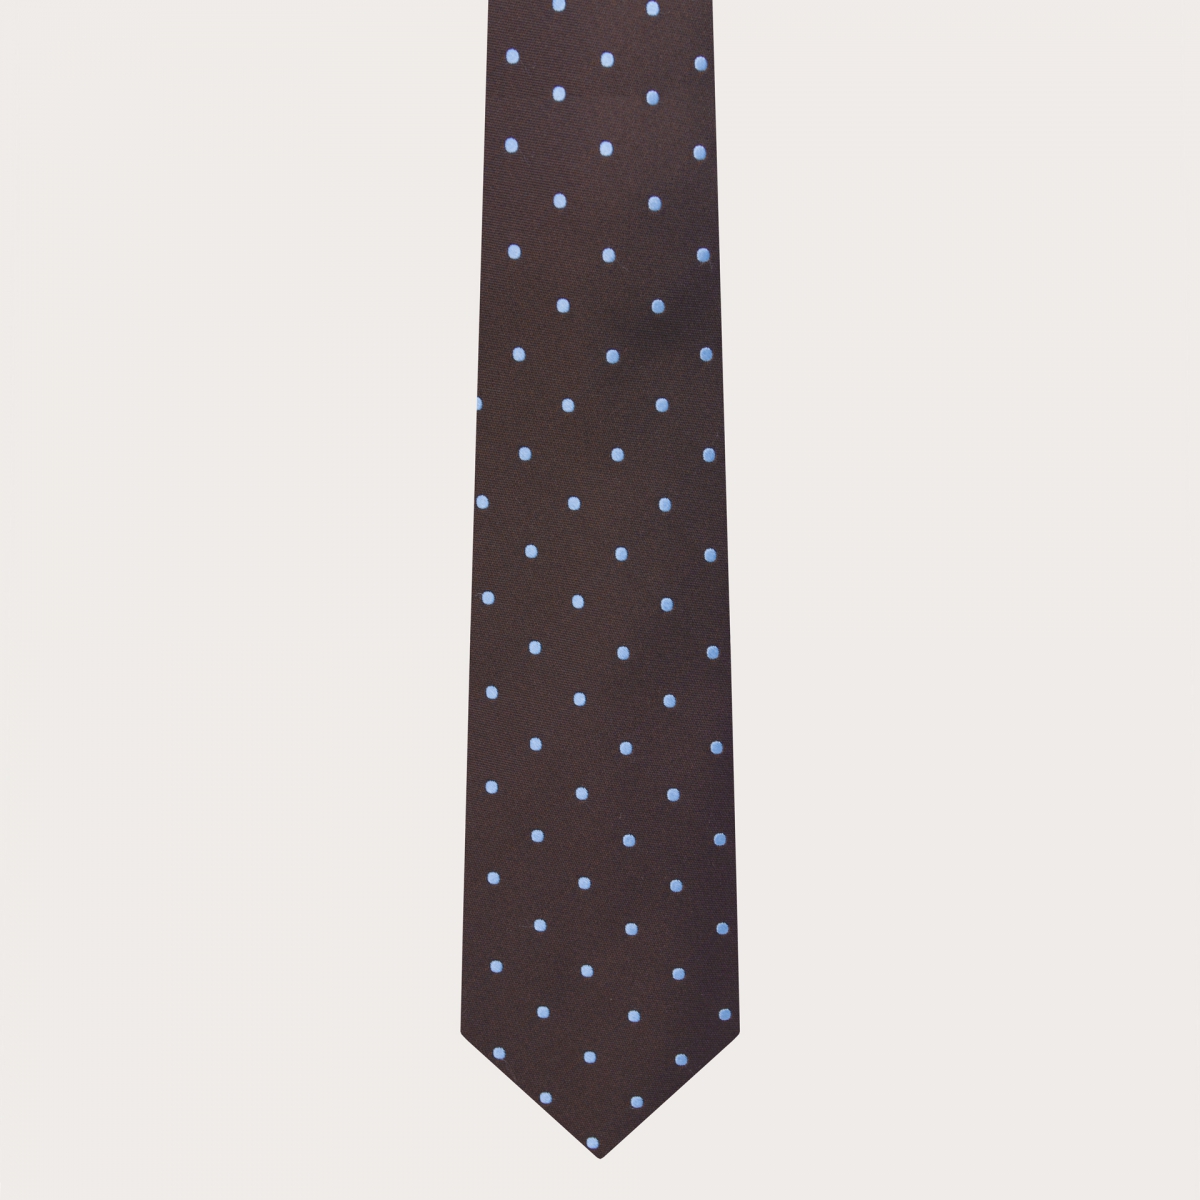 BRUCLE Elegante braune Krawatte mit hellblauem Punktmuster